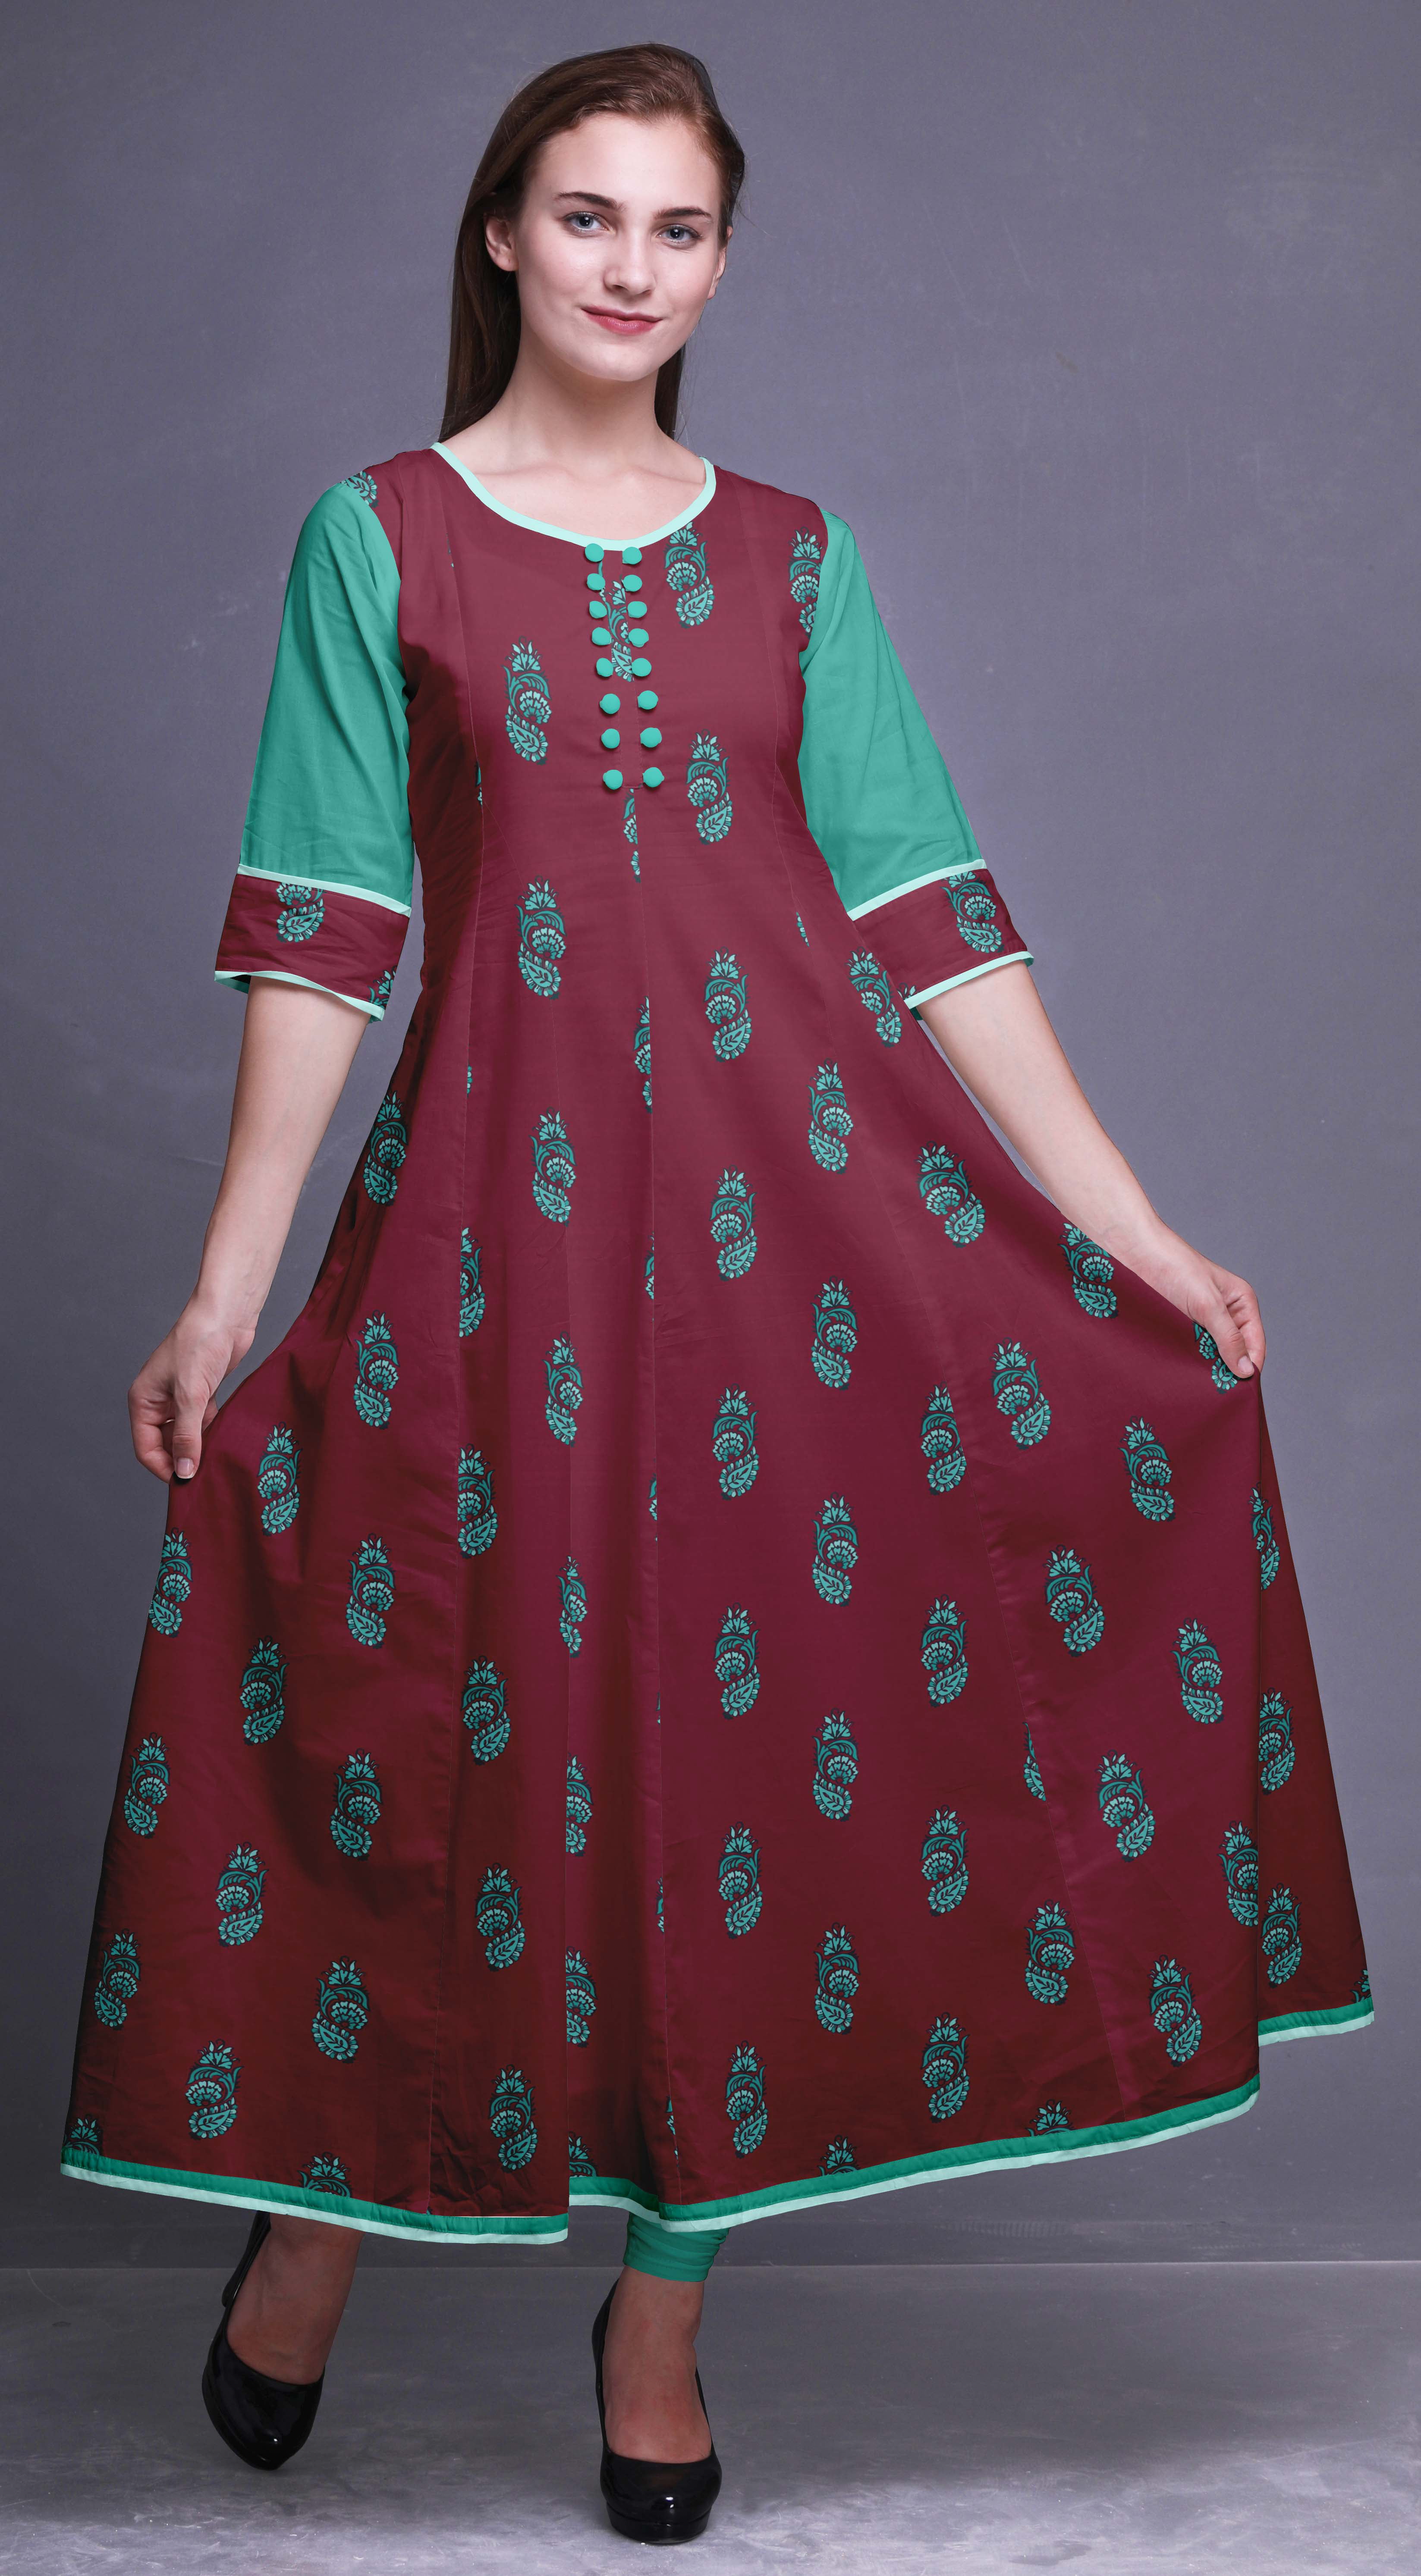 Details about   Indian Women Kurti Kurta Ethnic Designer Top Tunic Anarkali Long Maxi Dress 